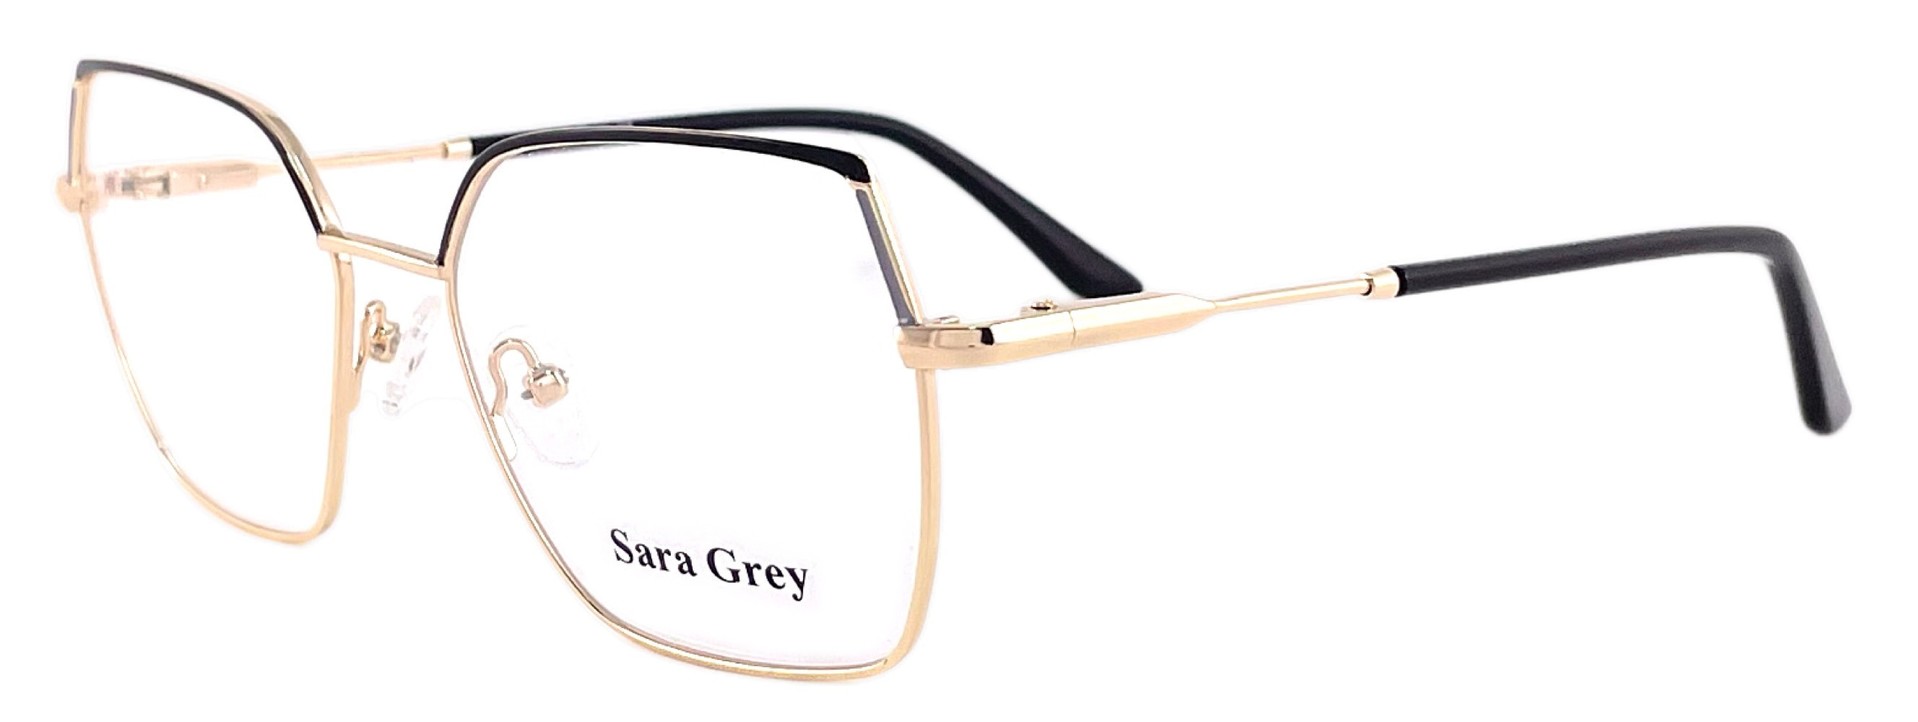 Sara Grey MG3734 C1 2